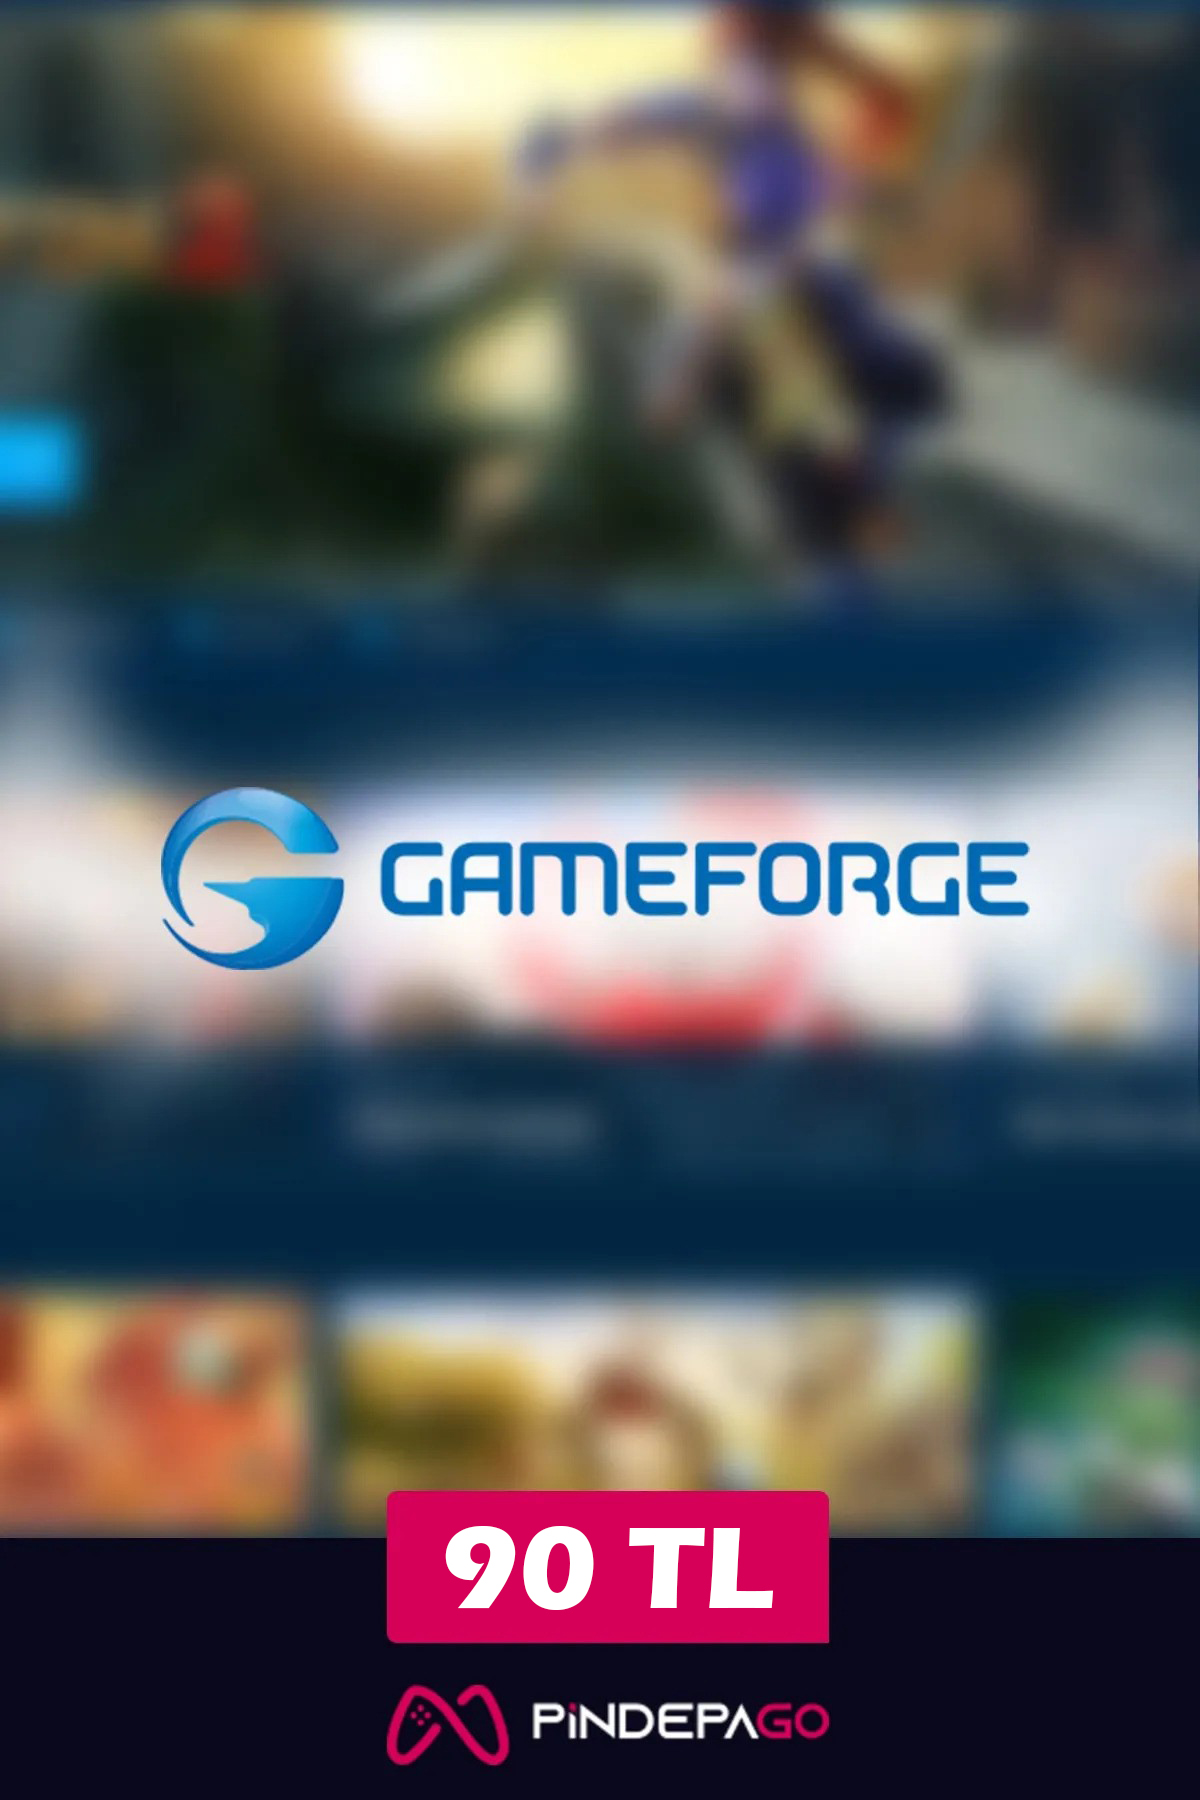 Gameforge 90 TL